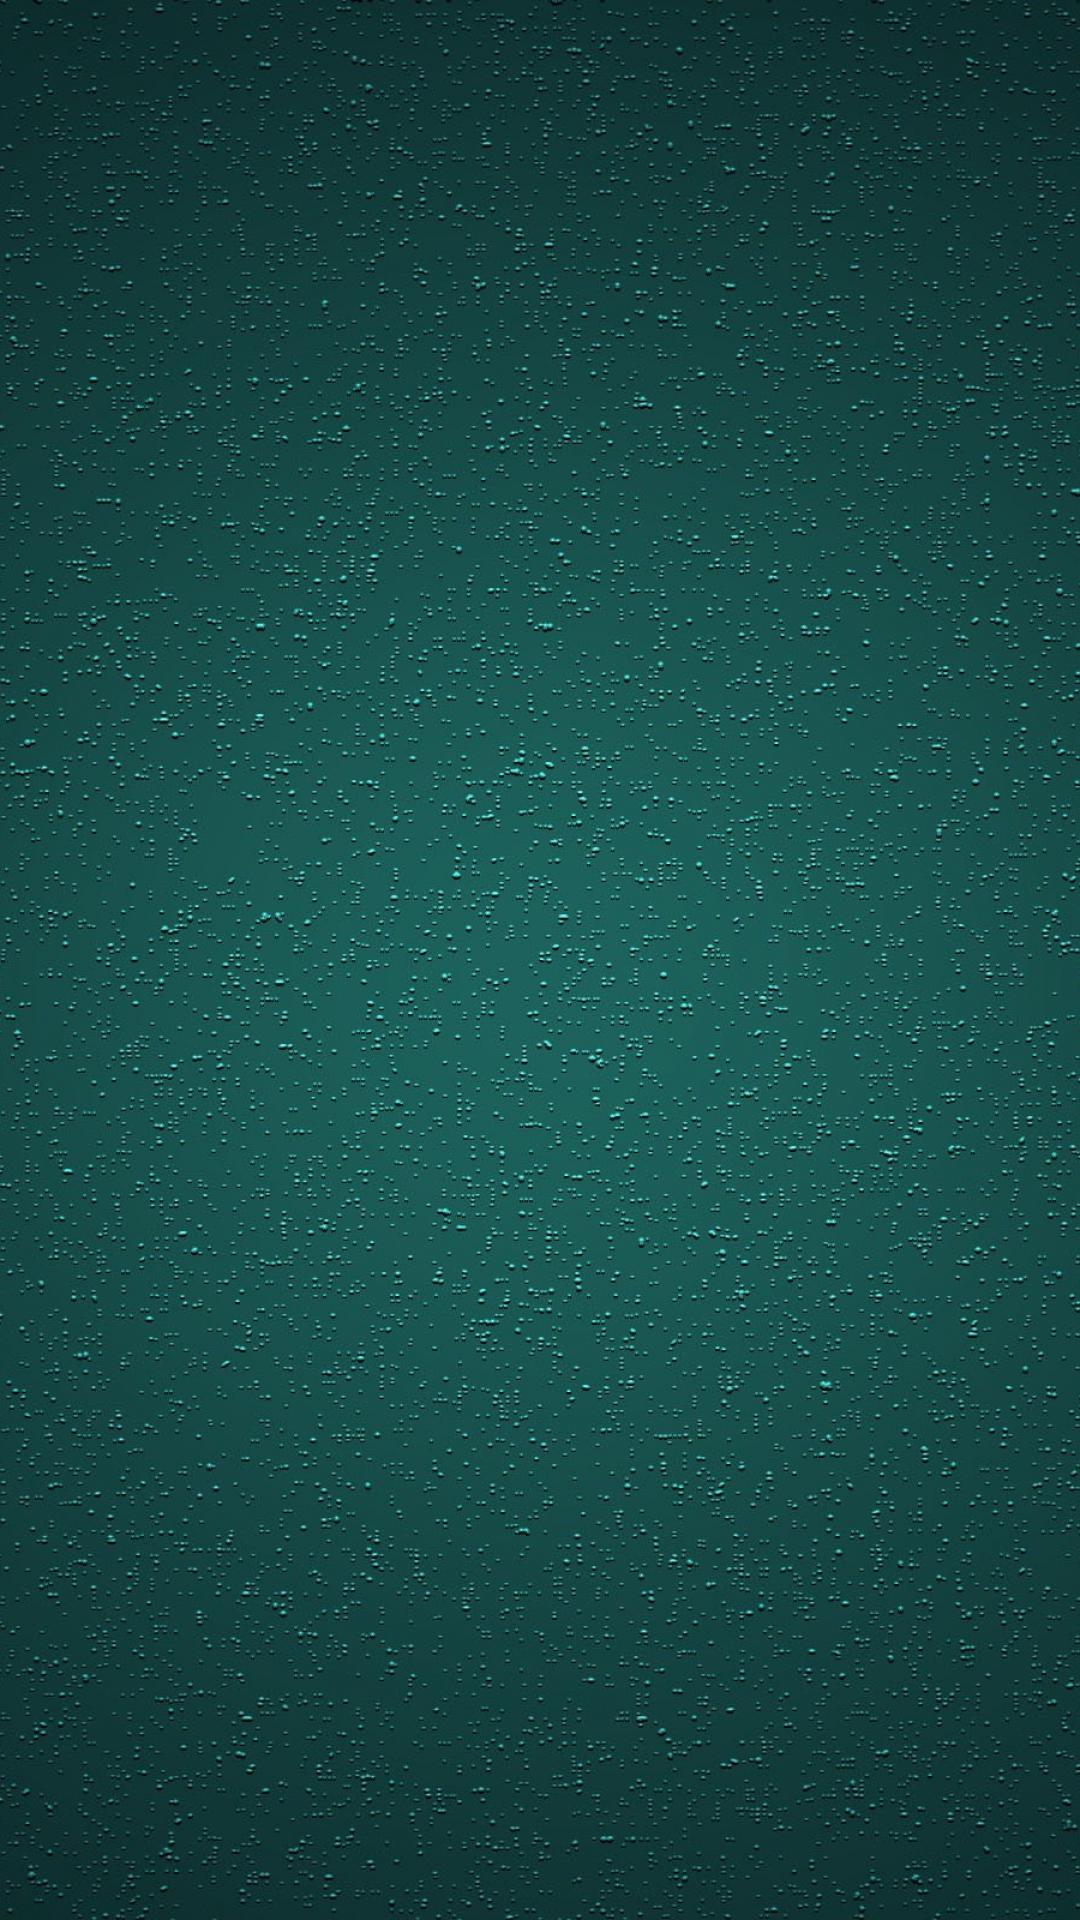 einfache hd wallpaper für mobile,grün,aqua,blau,türkis,blaugrün